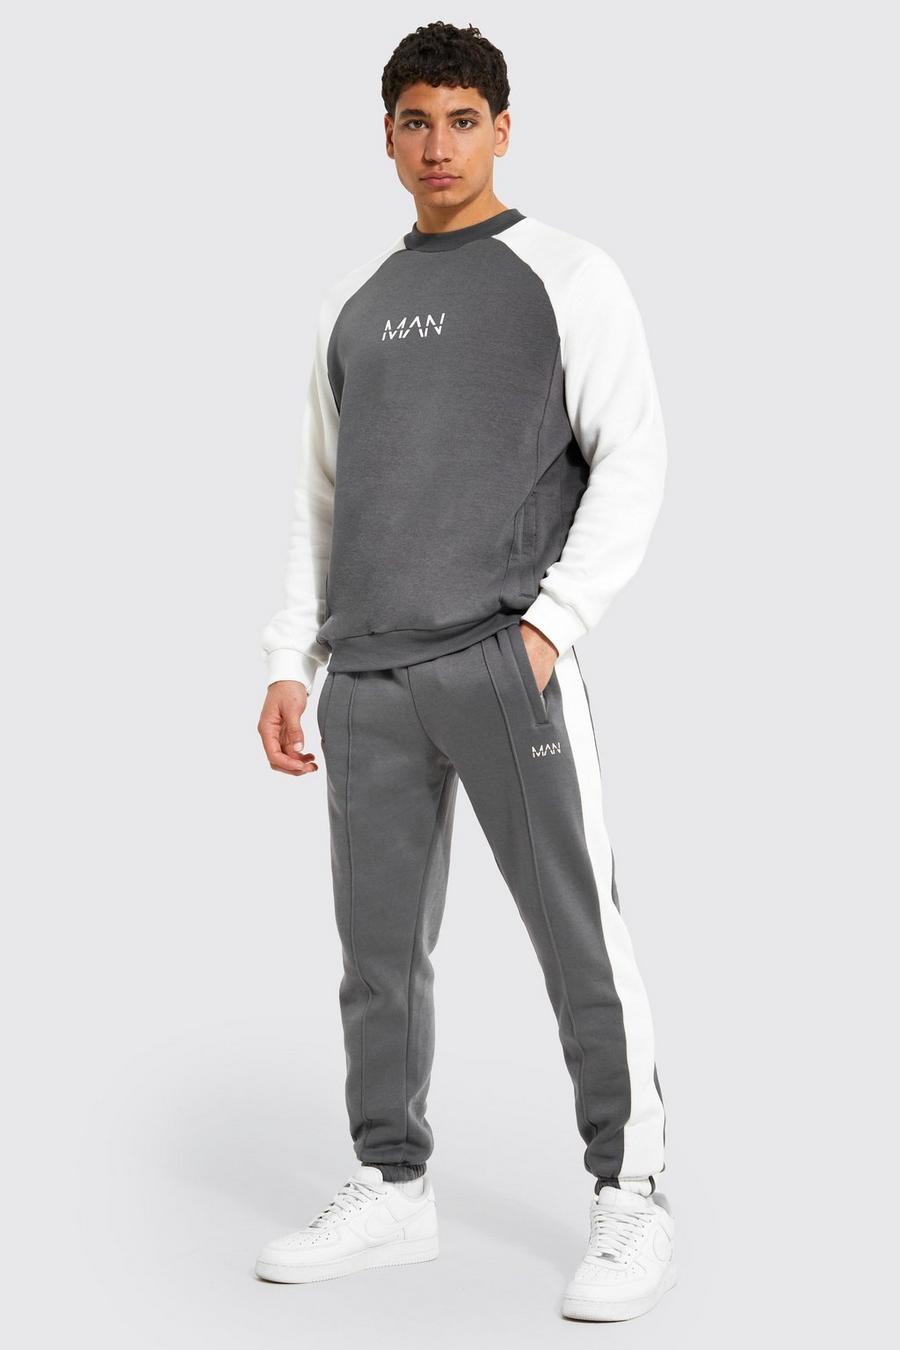 Charcoal grey Man Colour Block Sweatshirt Tracksuit